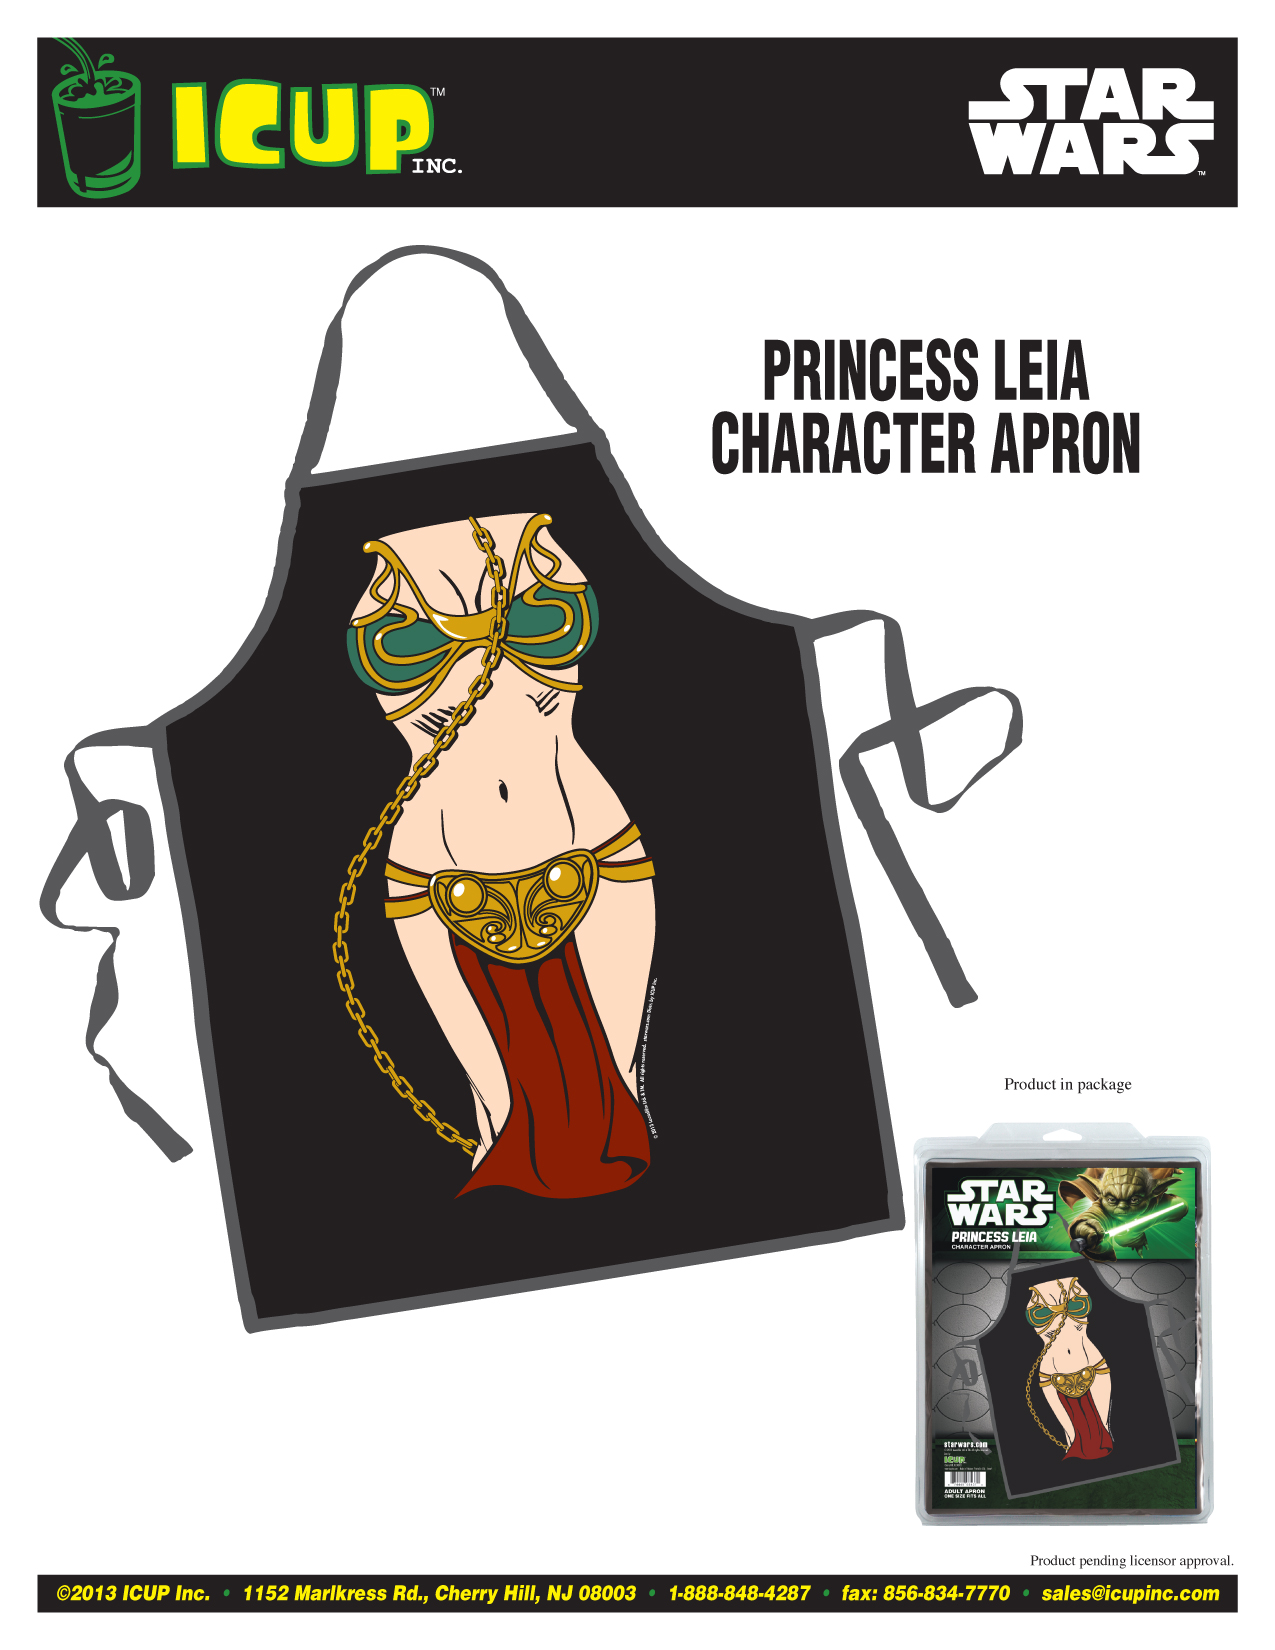 Star Wars Princess Leia Be the Character Apron